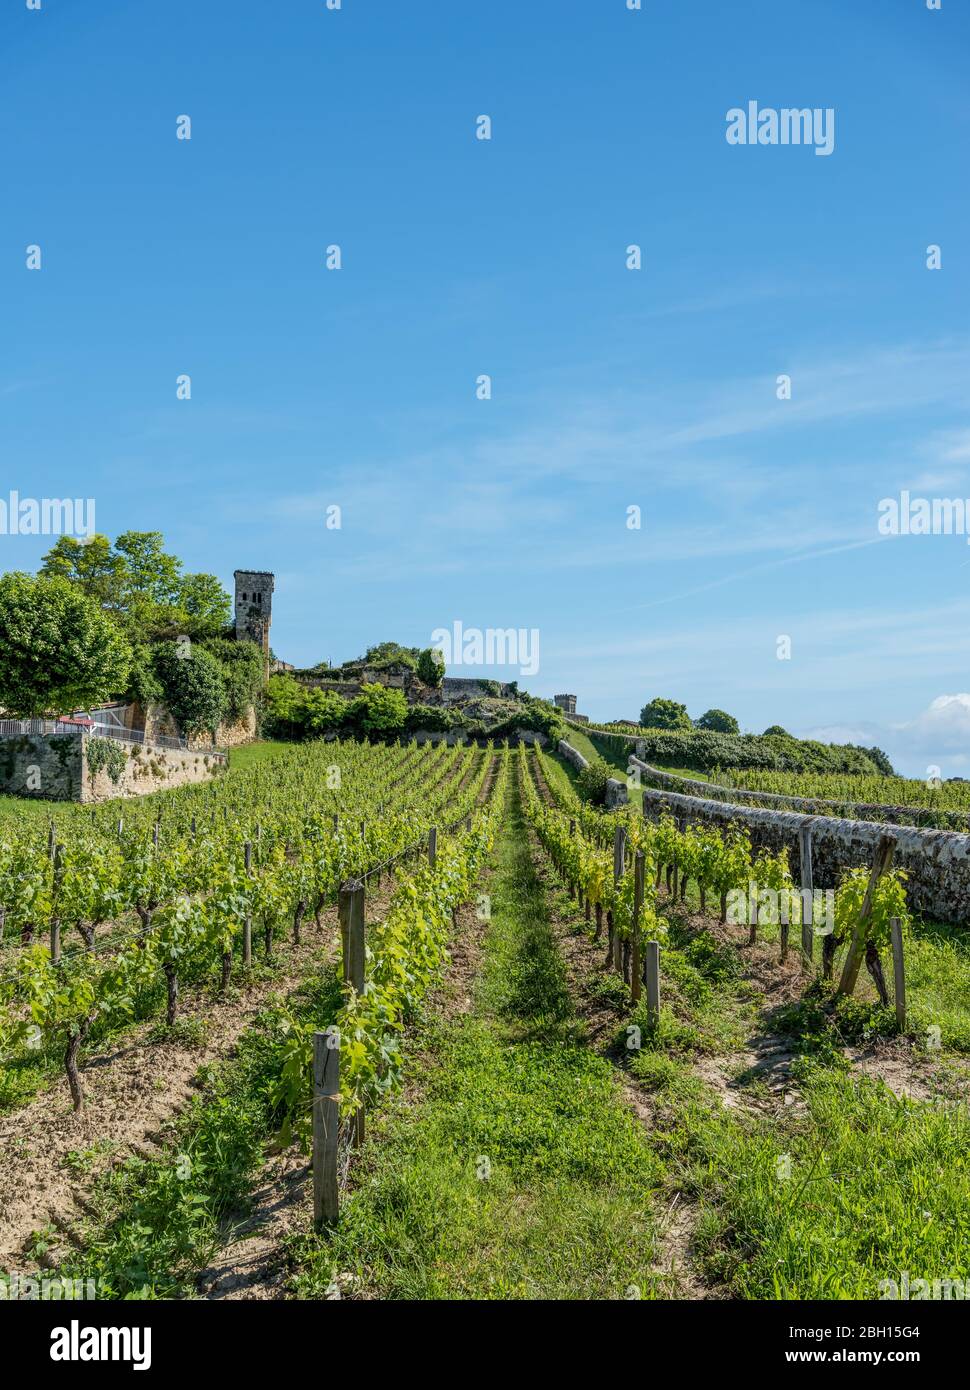 The vineyards of Saint-Emilion, near Bordeaux in France Stock Photo